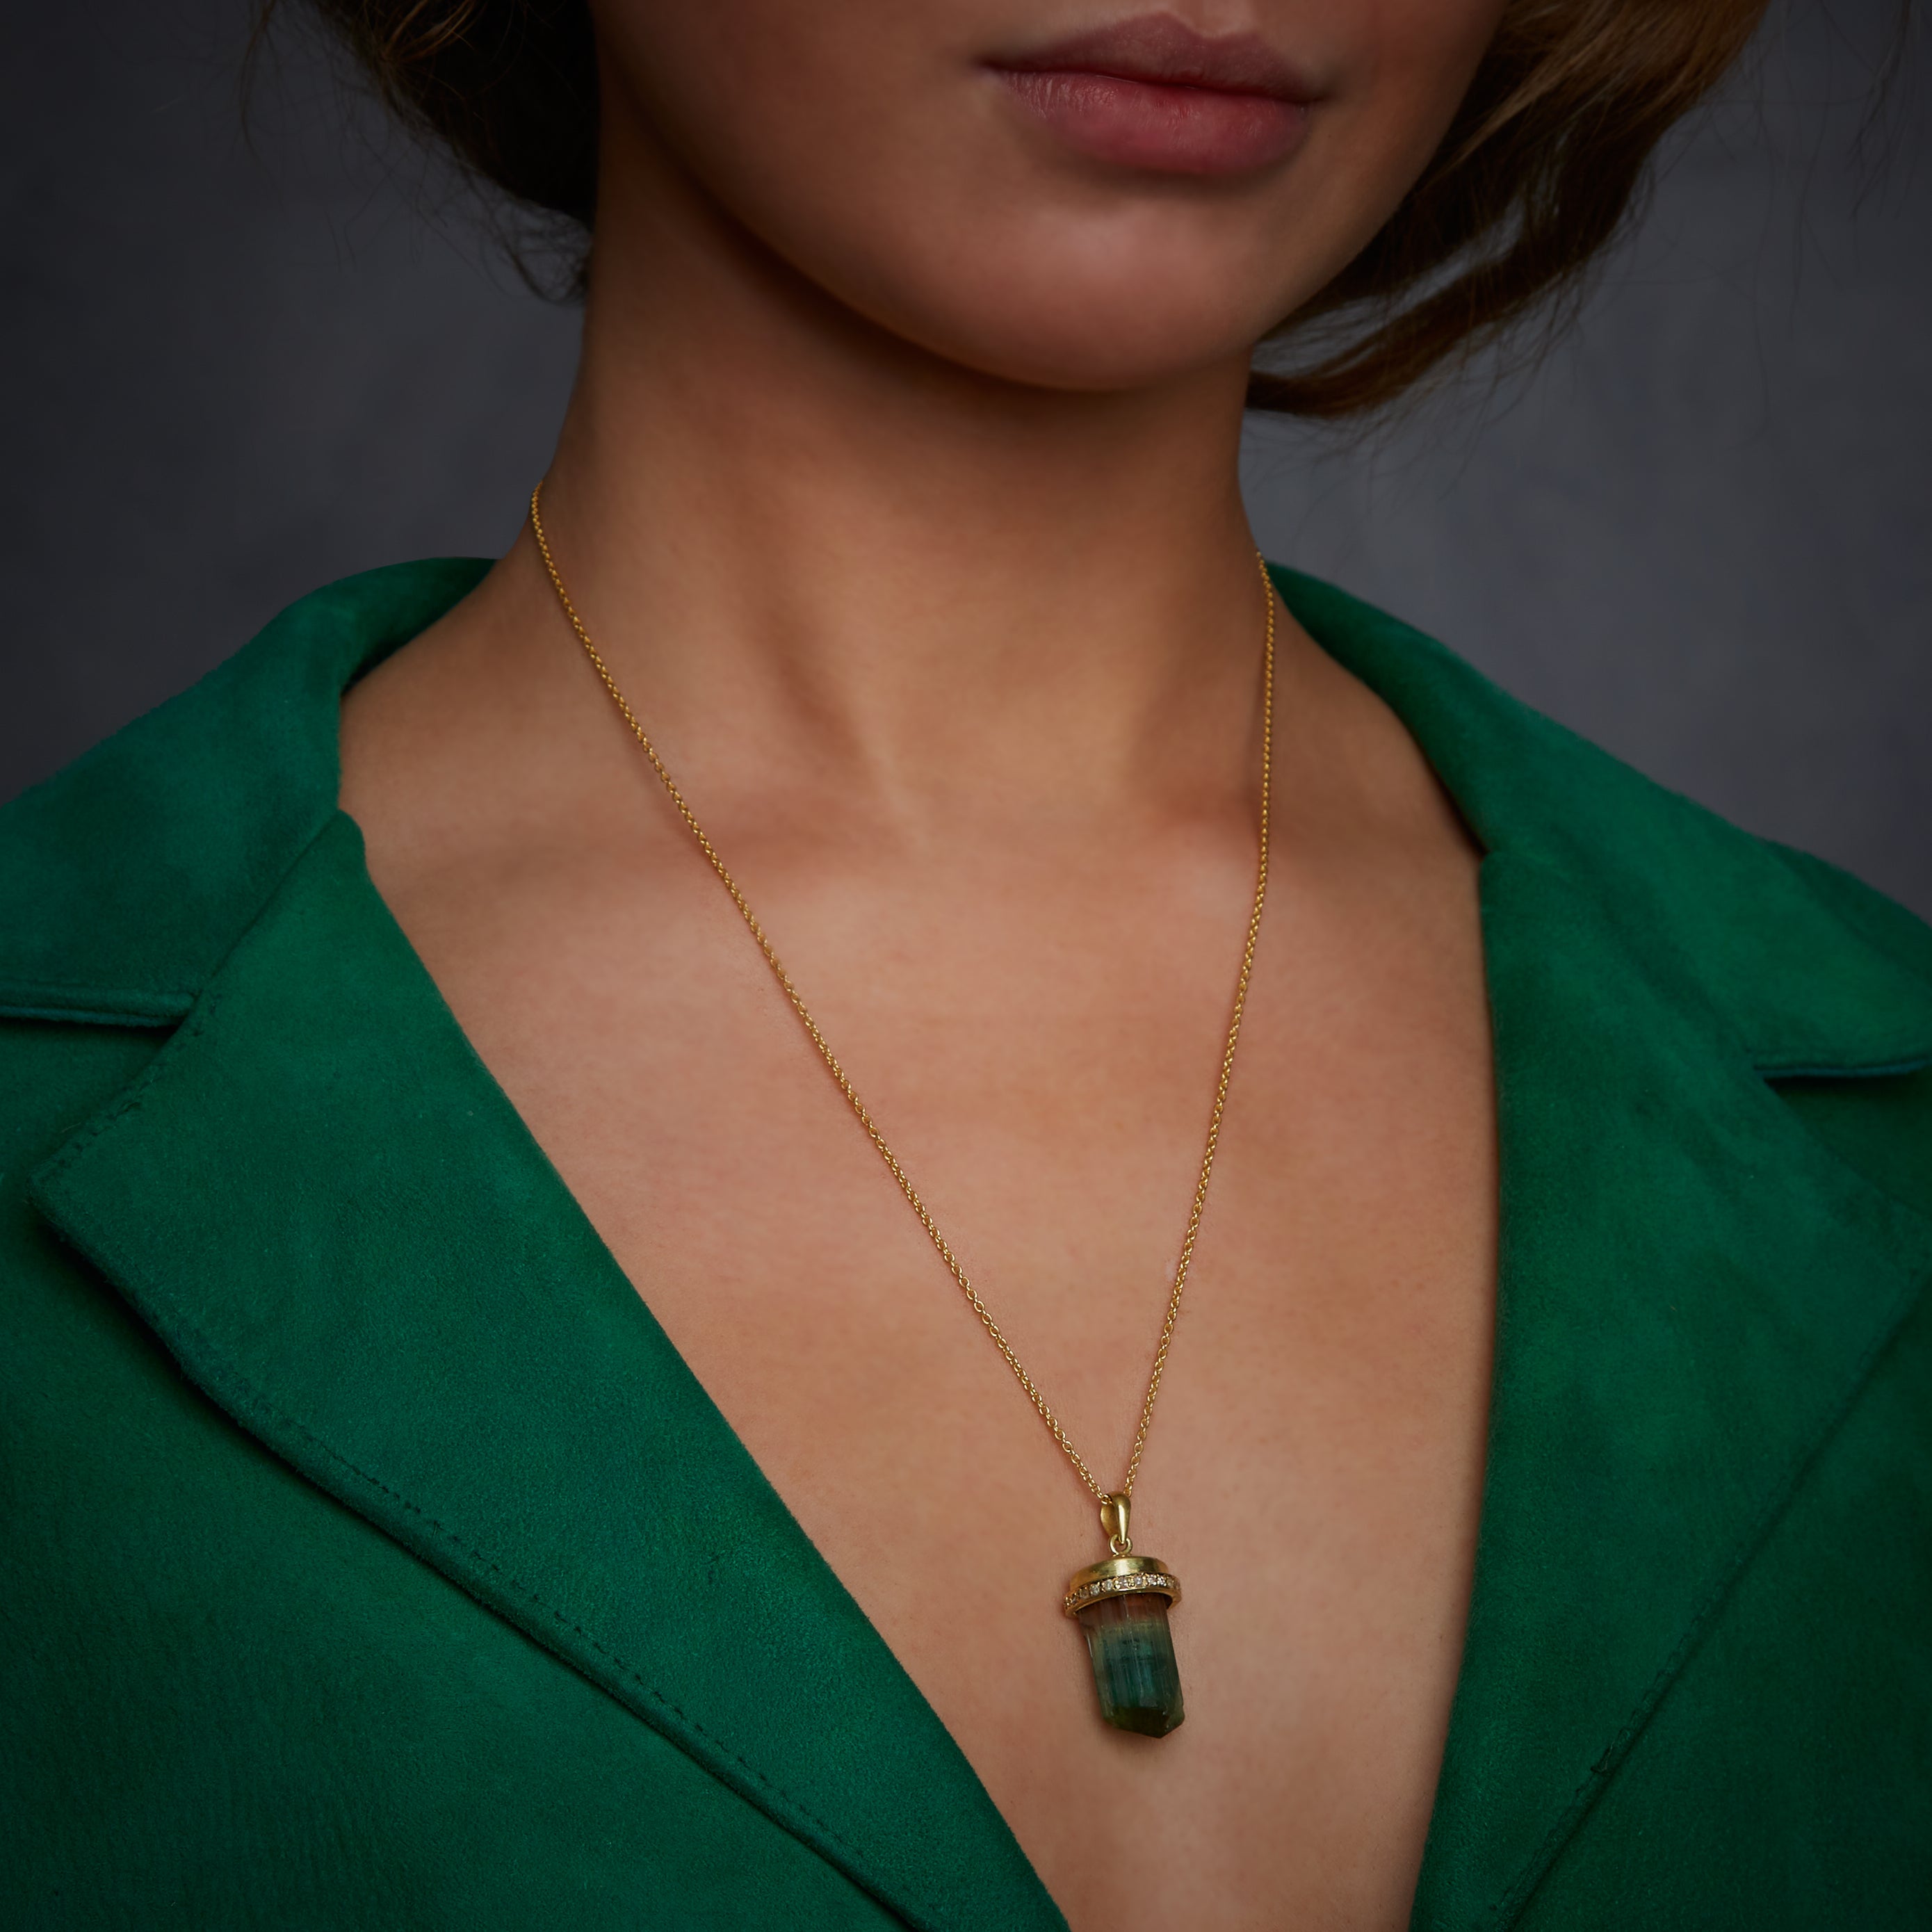 Hetre Alresford Hampshire Jewellery Accessories Sophie Theakston Small Aurora Necklace 